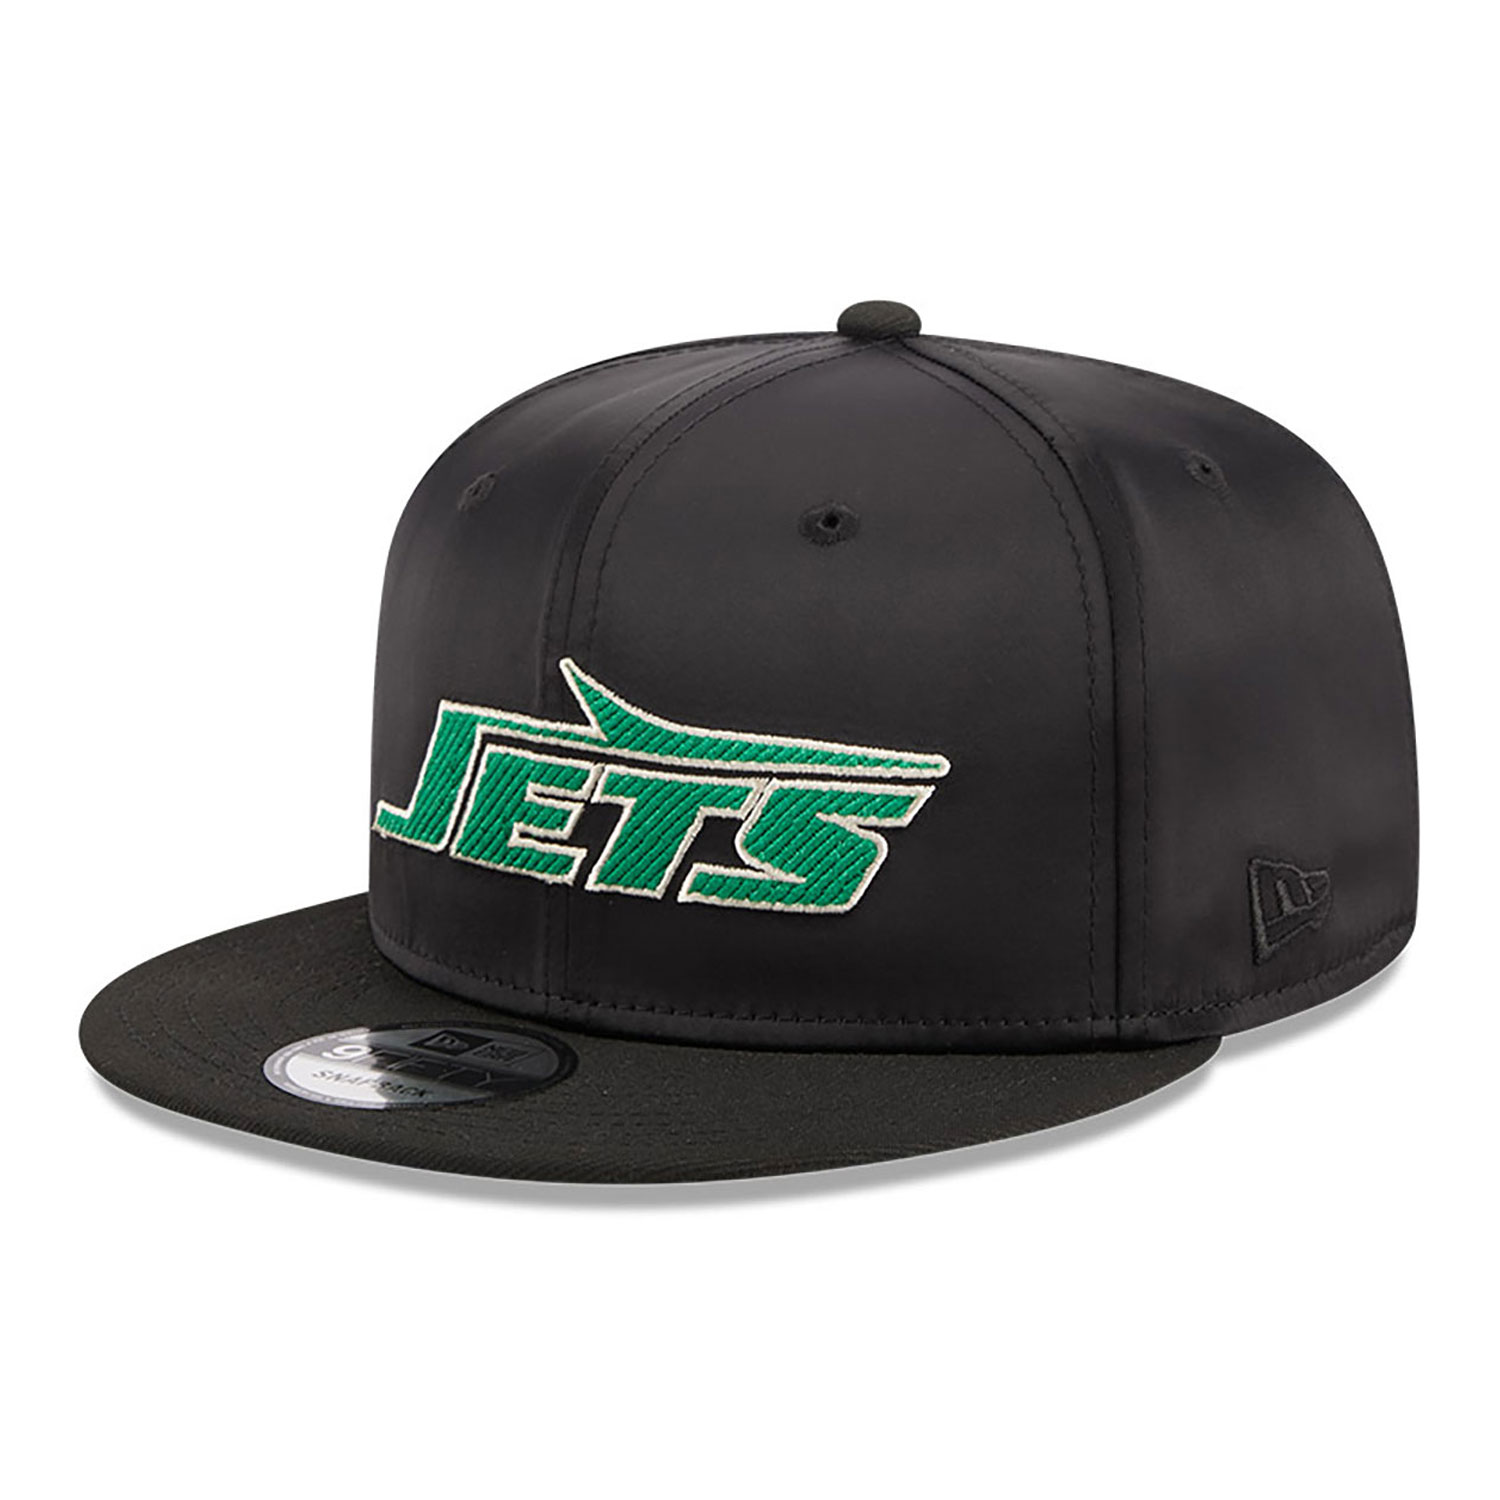 New York Jets Satin Black 9FIFTY Snapback Cap